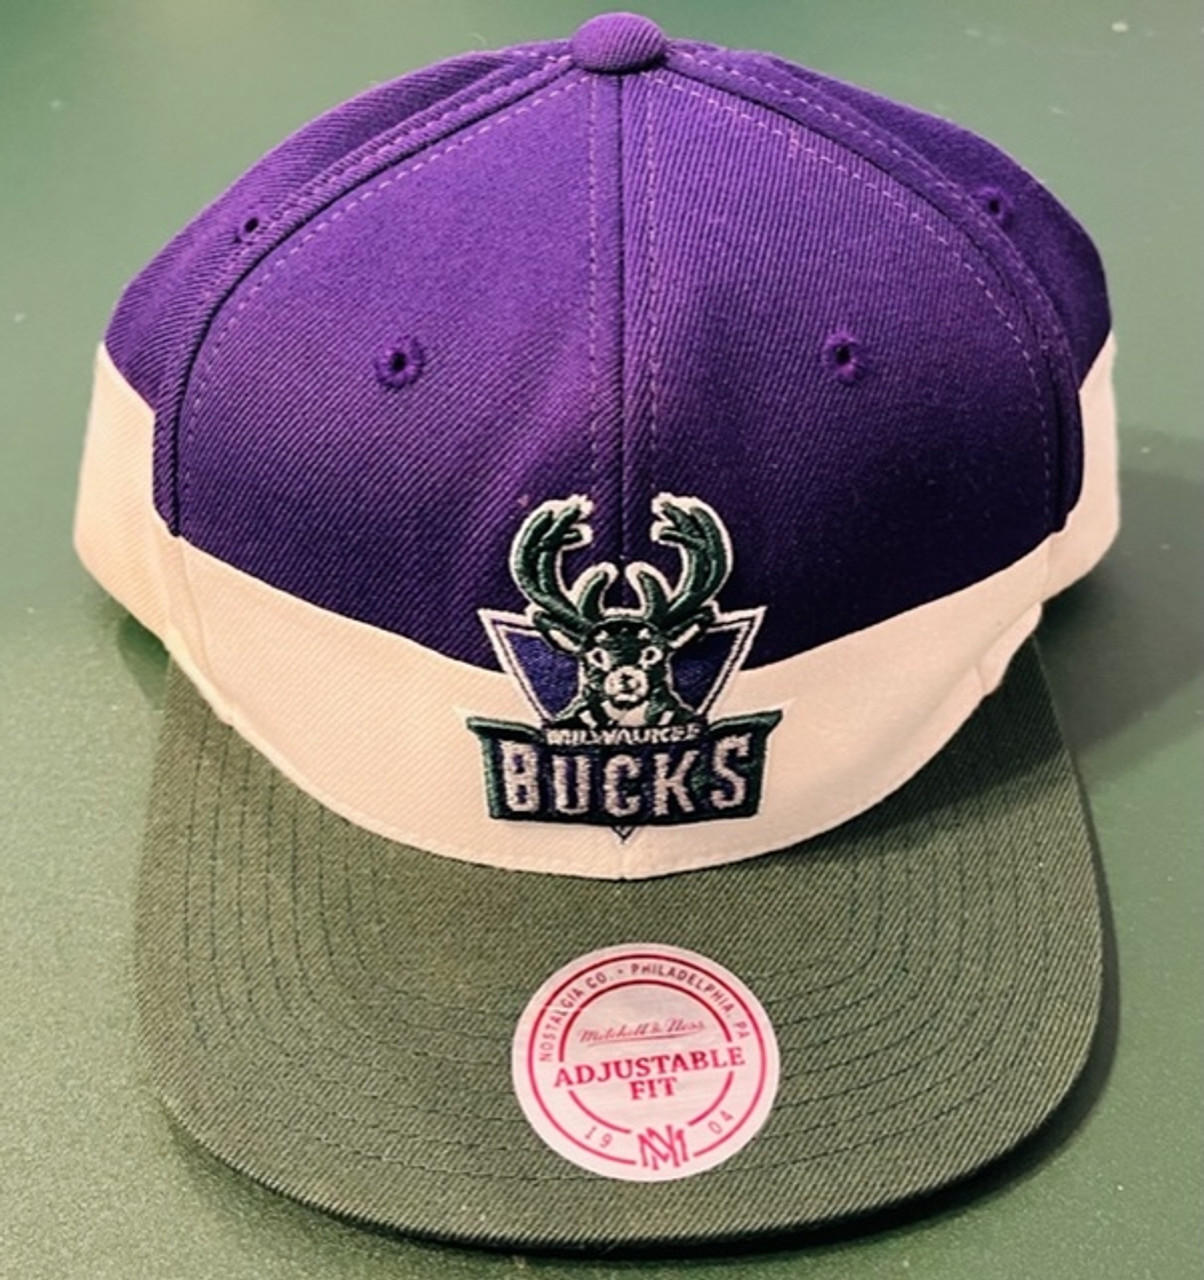 Mitchell & Ness Milwaukee Bucks Swingman Pop Snapback Hat - Green - MODA3